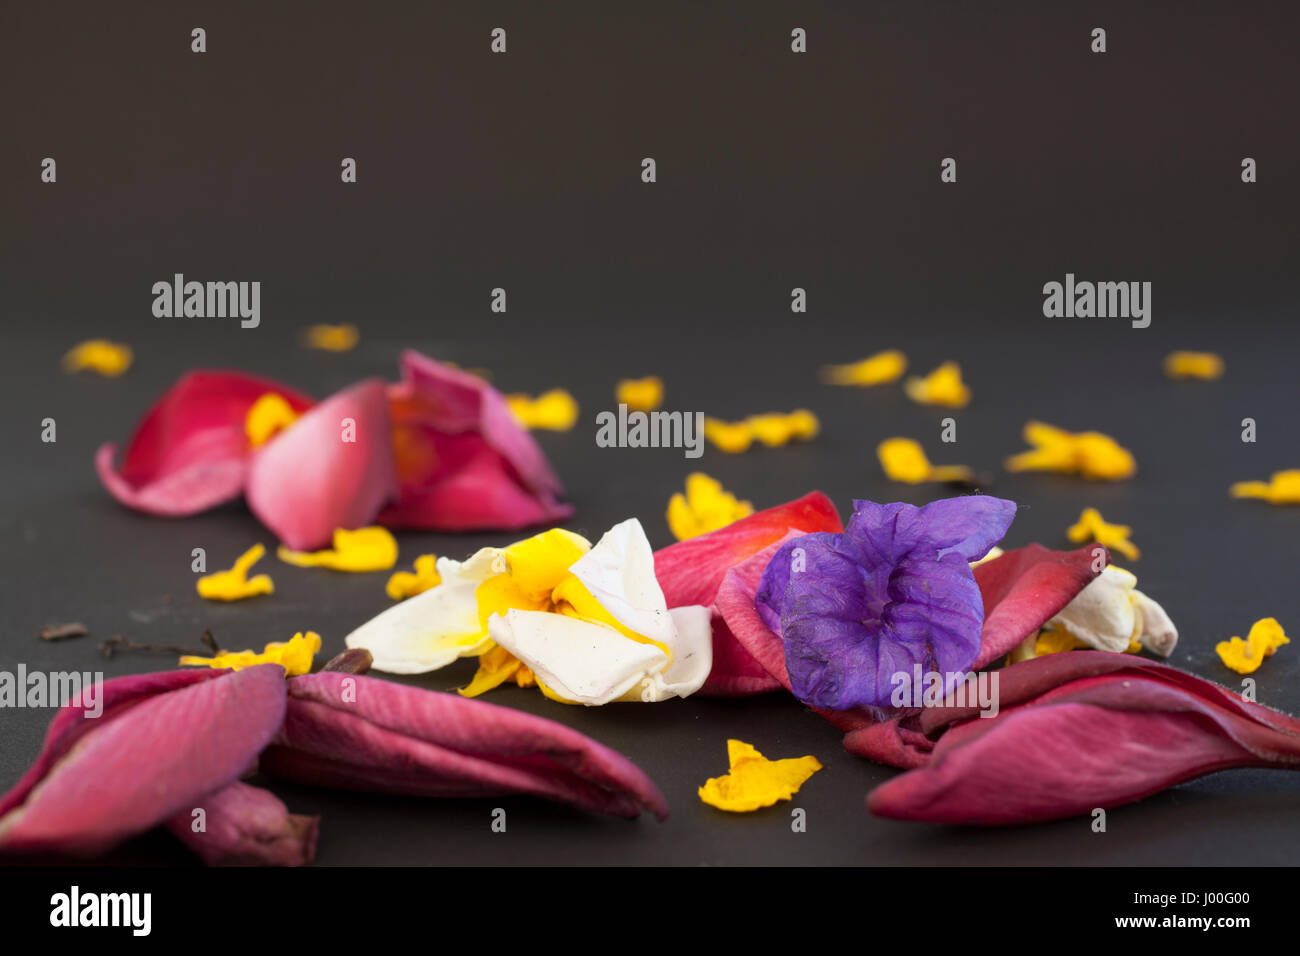 Mixed flowers fallen on a plain dark background Stock Photo